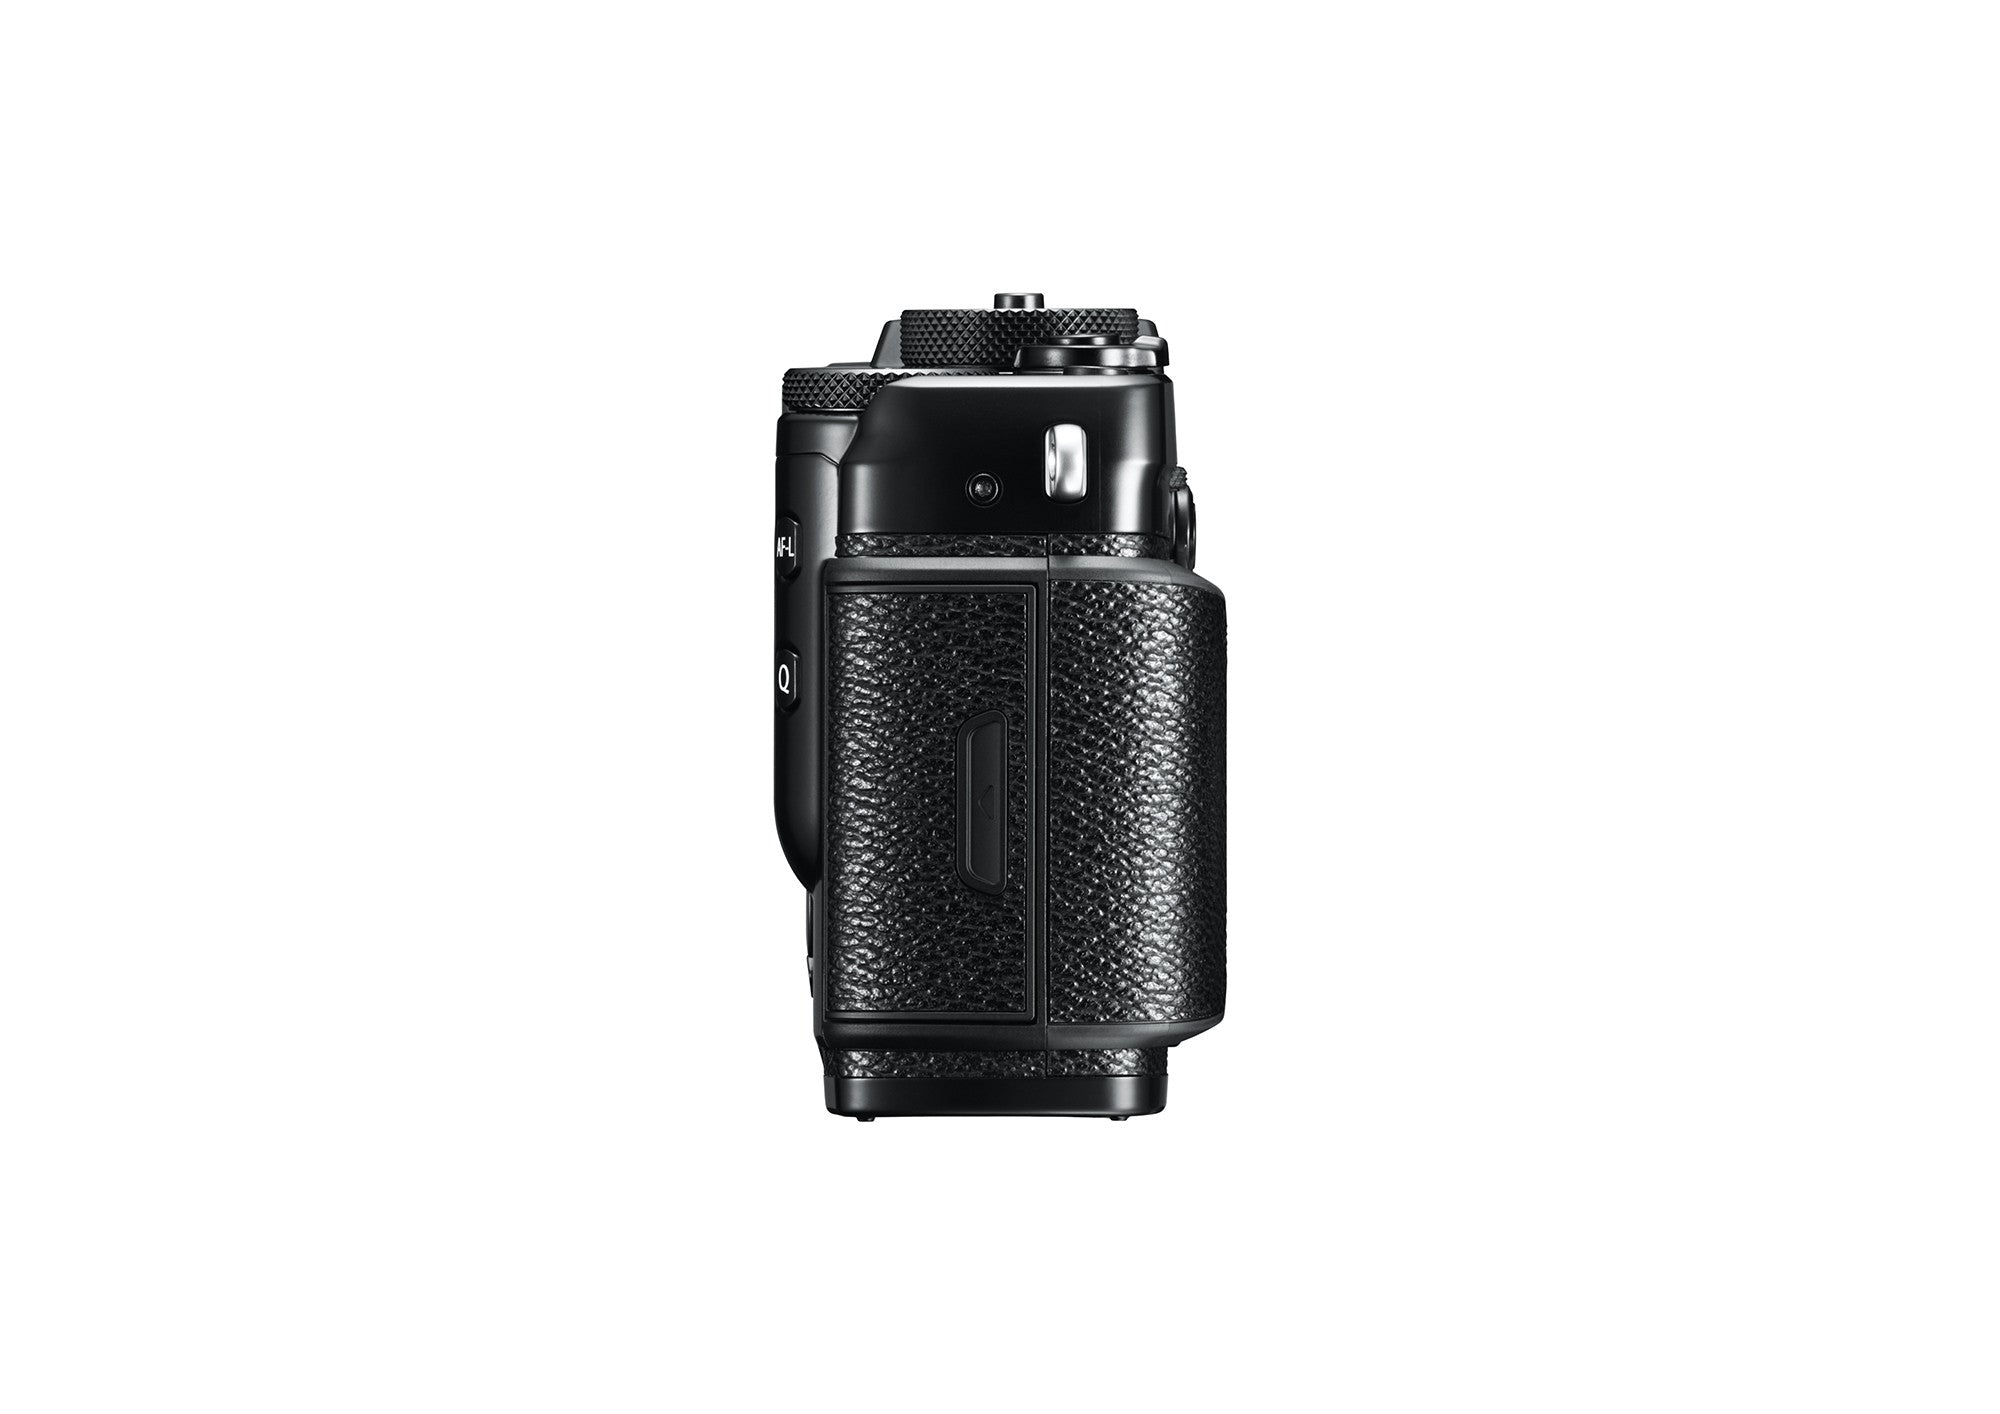 Fujifilm X-Pro2 Digital Camera Body (Black), camera mirrorless cameras, Fujifilm - Pictureline  - 5